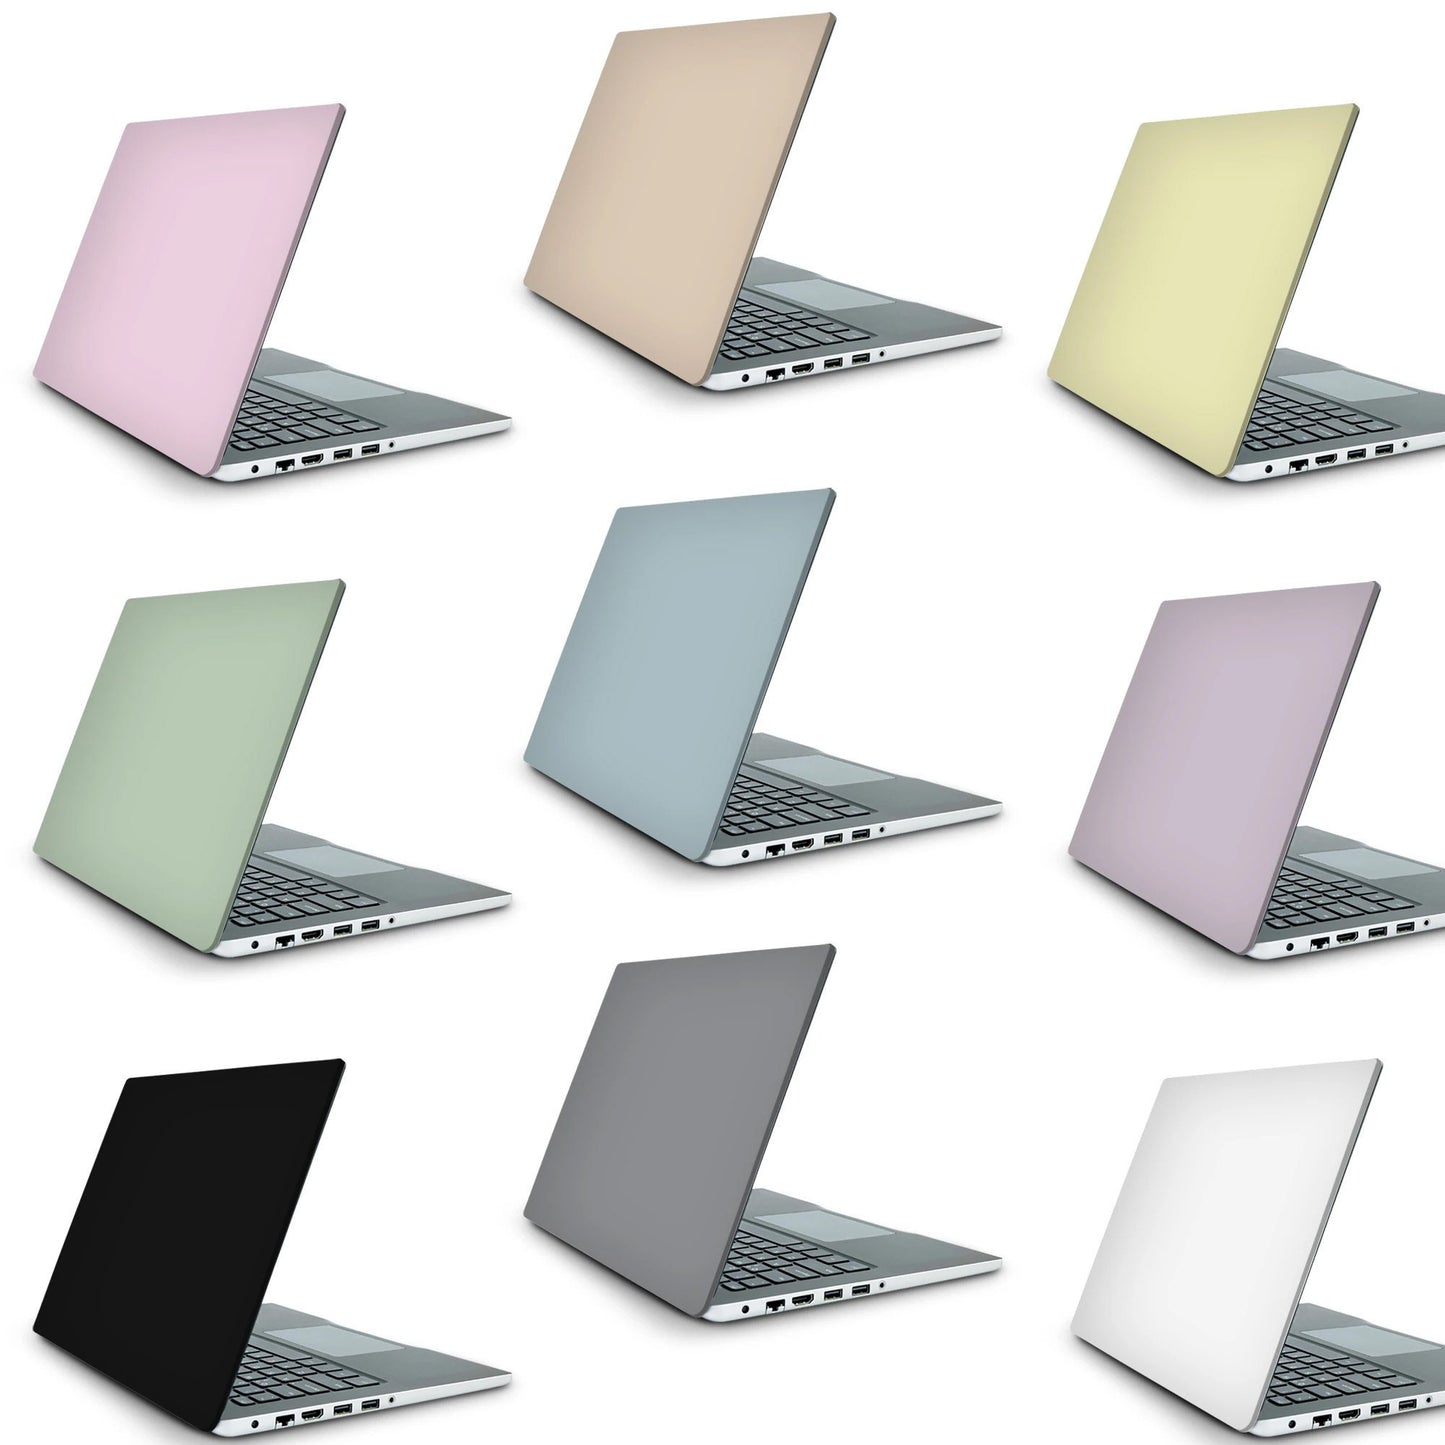 Floral Laptop Skin, Laptop Cover, Laptop Skins, Removable Laptop Skins, Laptop Decal, Customized Laptop Skin, Laptop Stickers 205